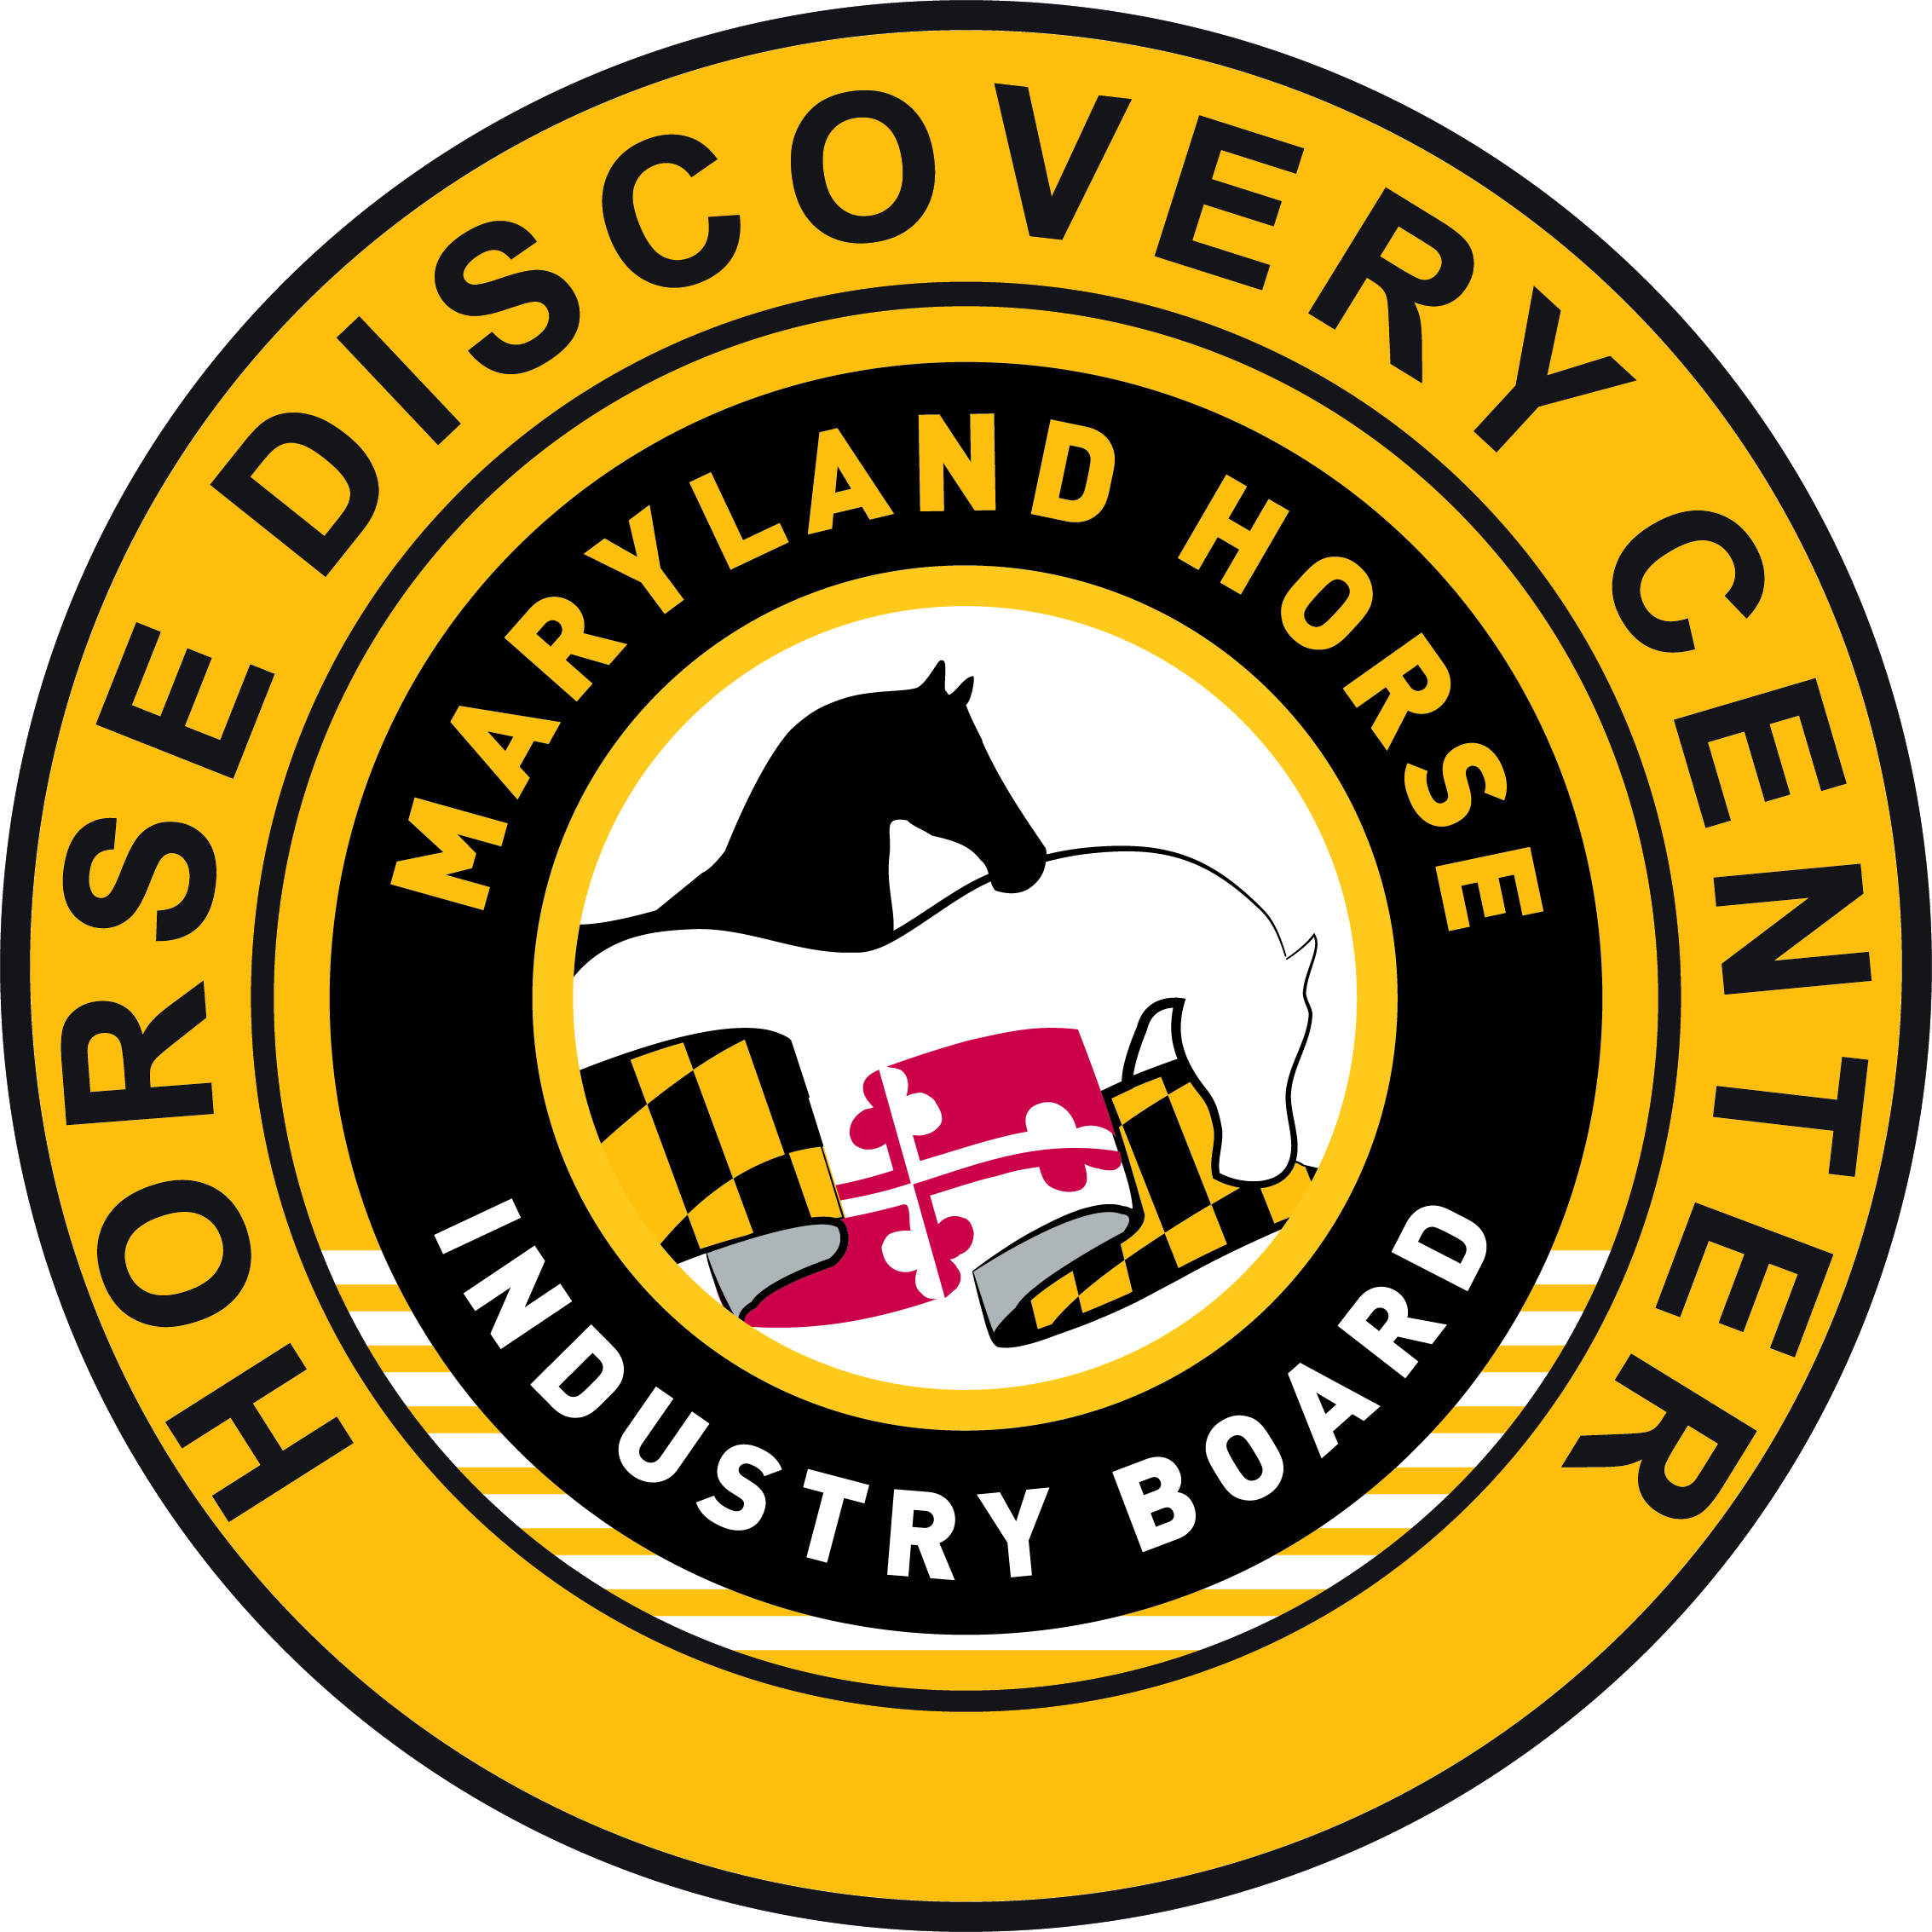 MHIB Horse Discovery Center logo.jpg